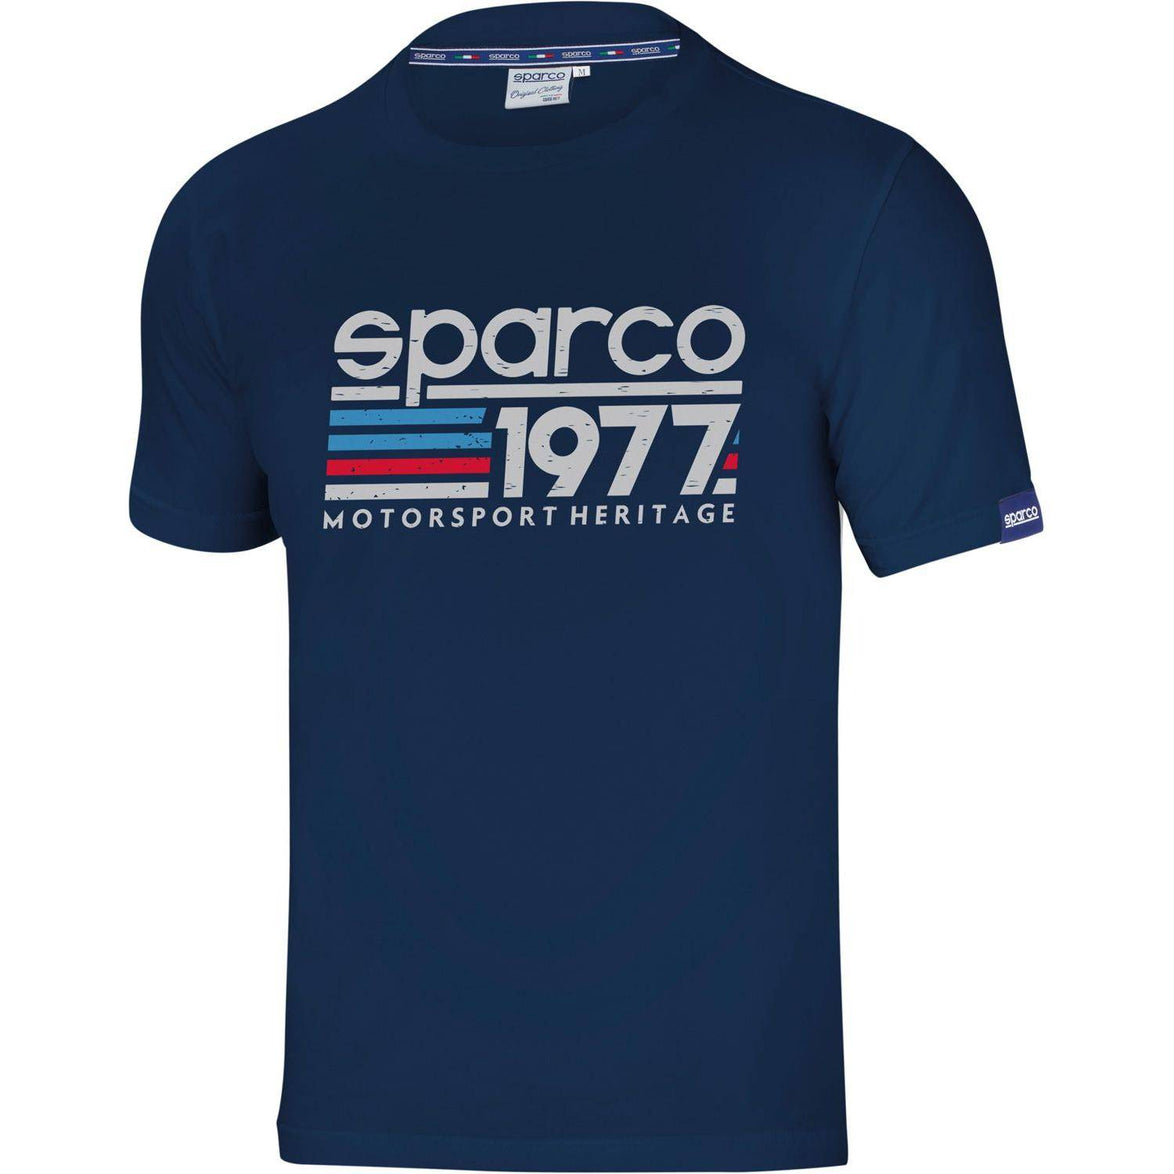 Sparco T-shirt 1977